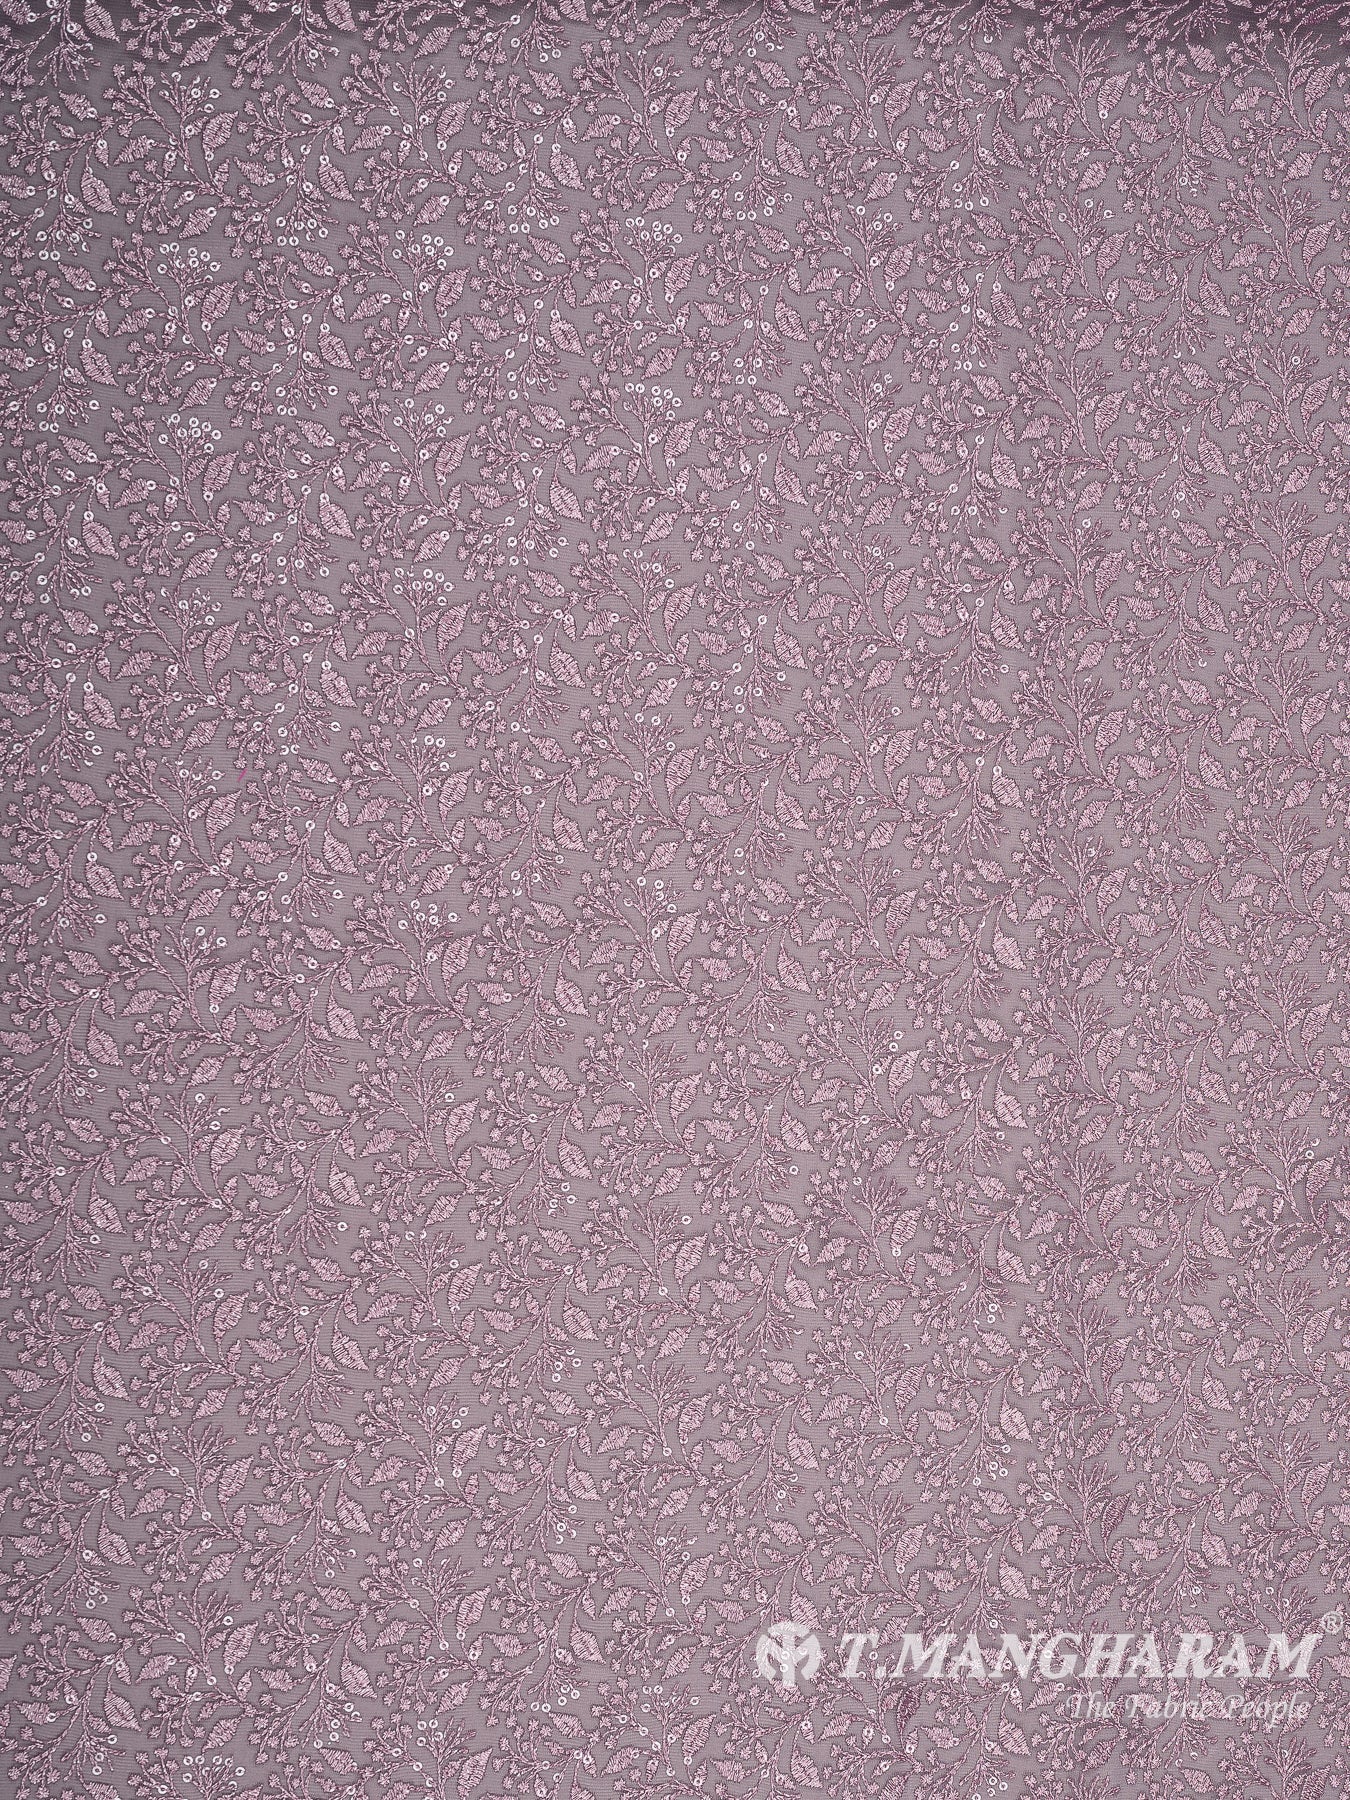 Violet Net Fabric - EB6596 view-3